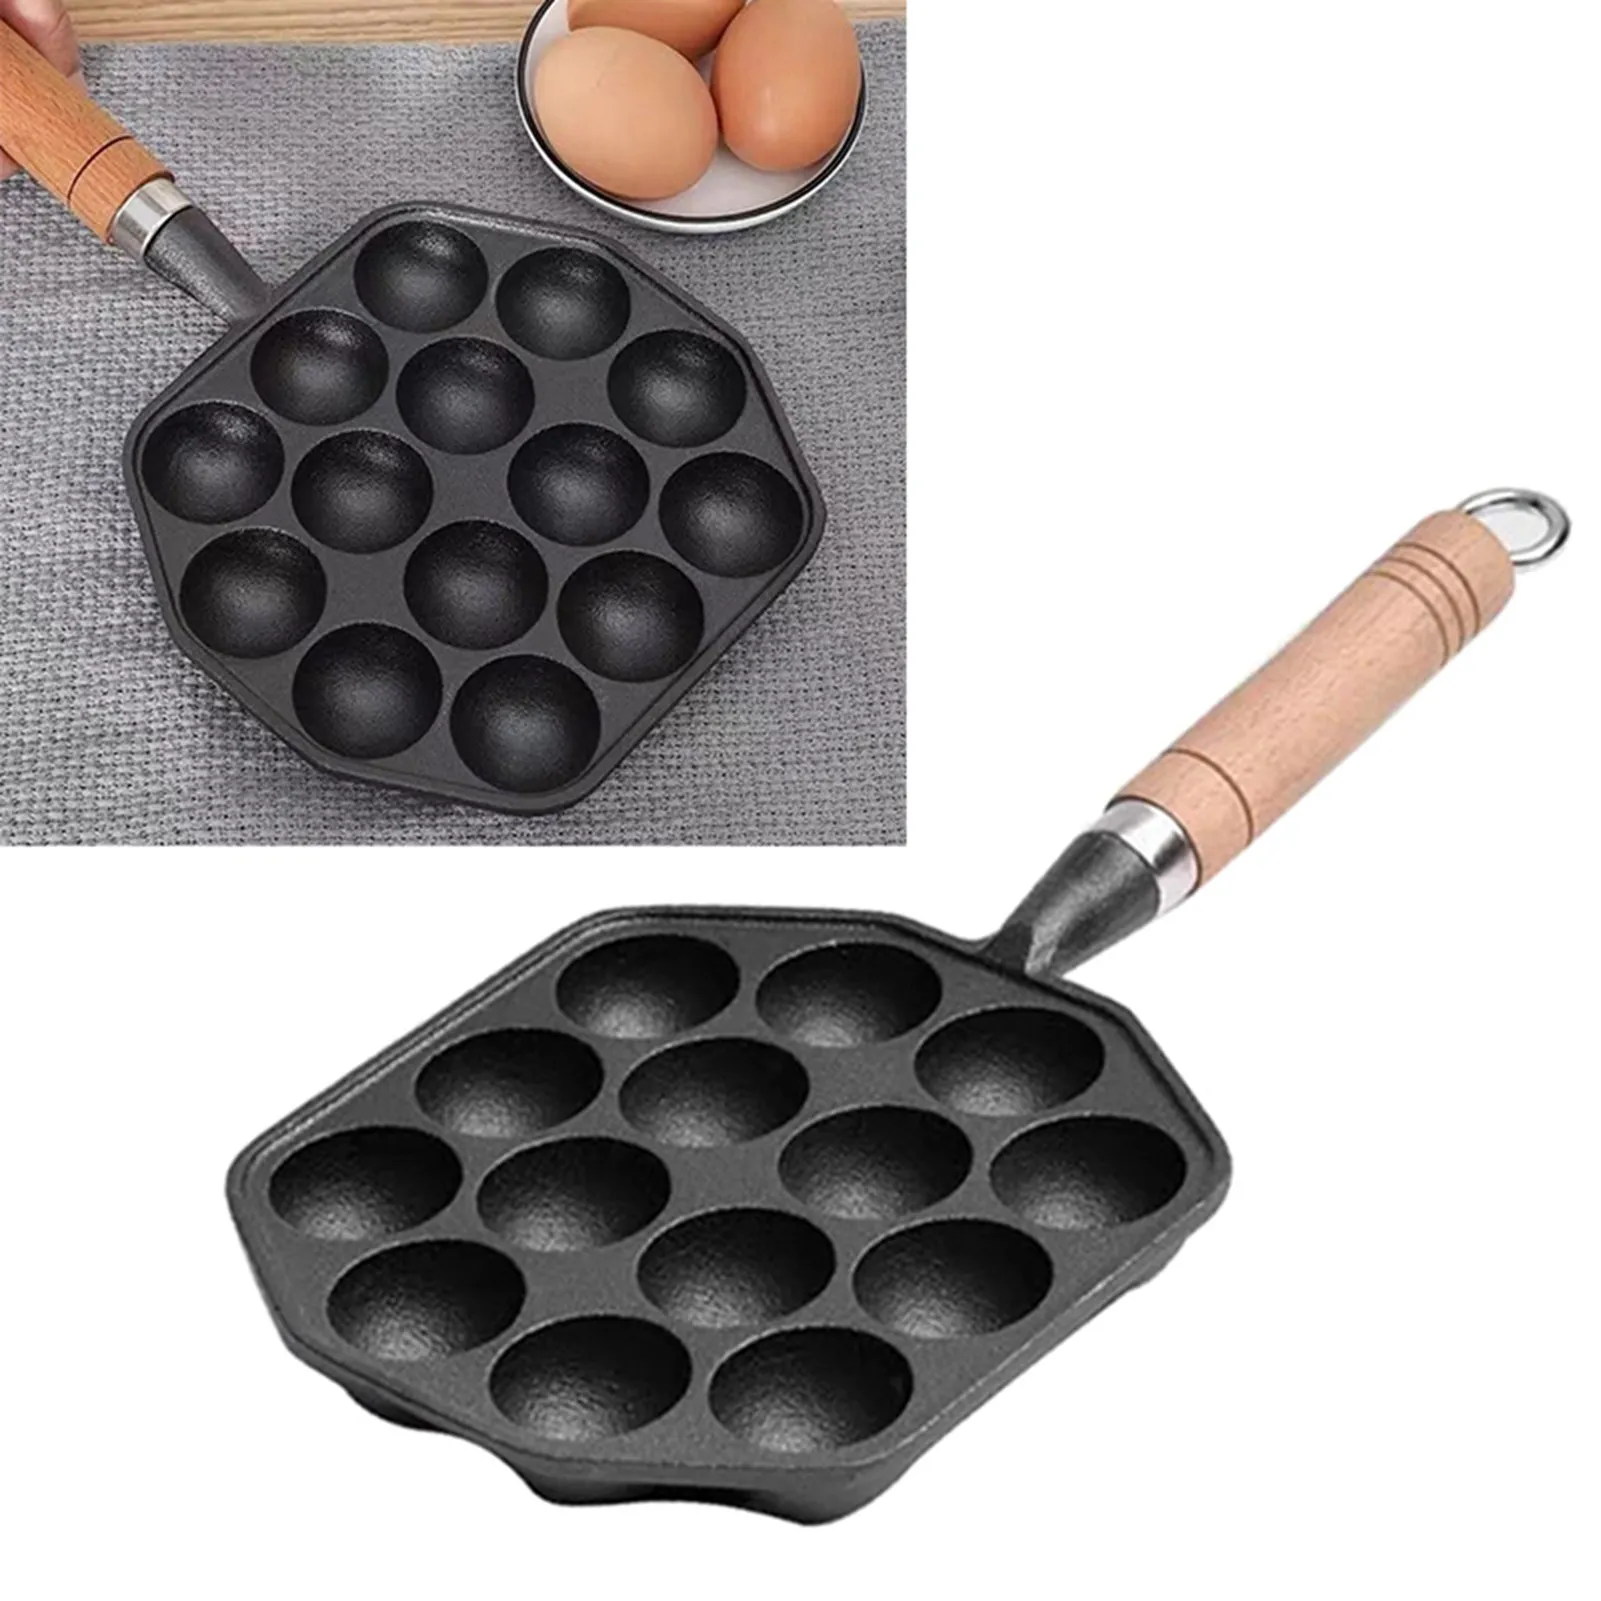 

14 Holes Takoyaki Pan Nonstick Cast Iron Octopus Meat Balls Mold Maker With Detachable Handle For Home Pancake Baking